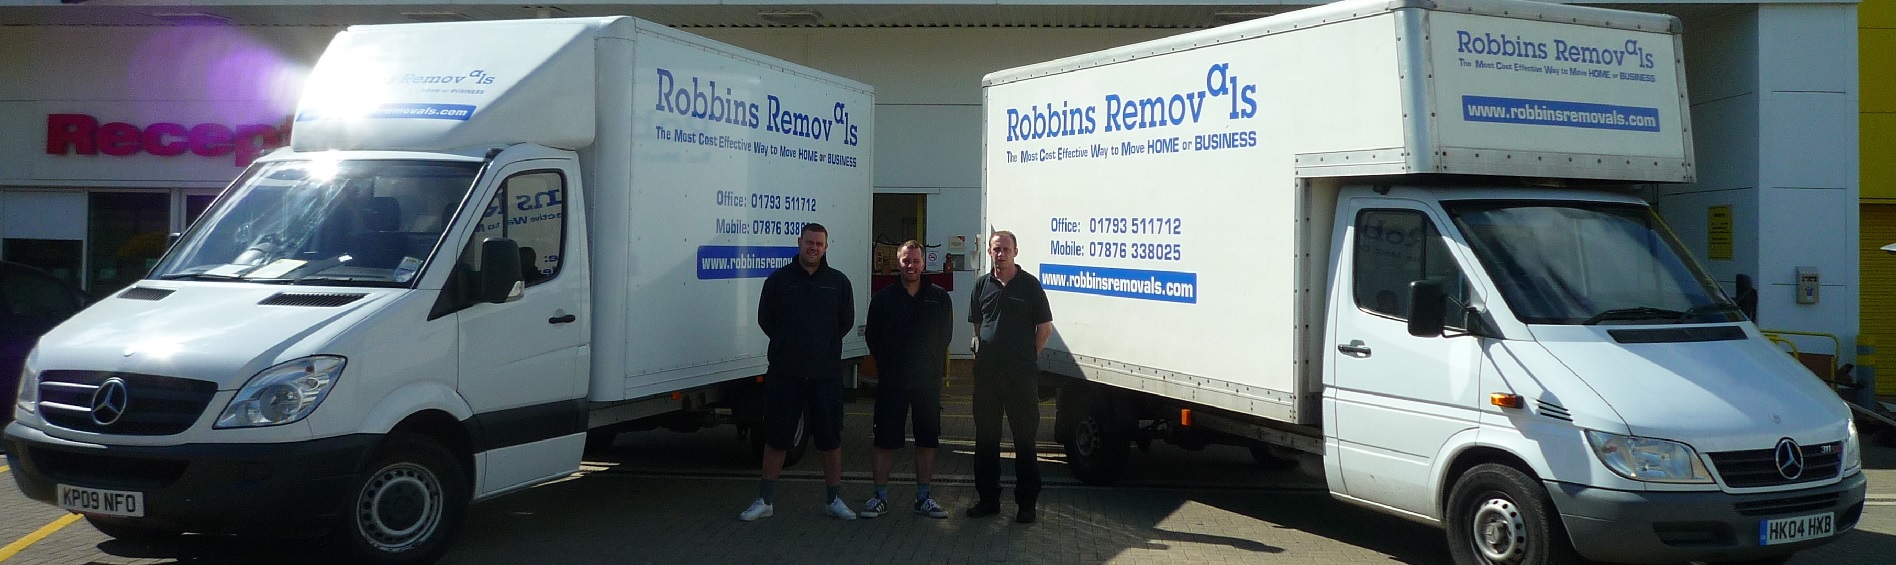 robbins removals